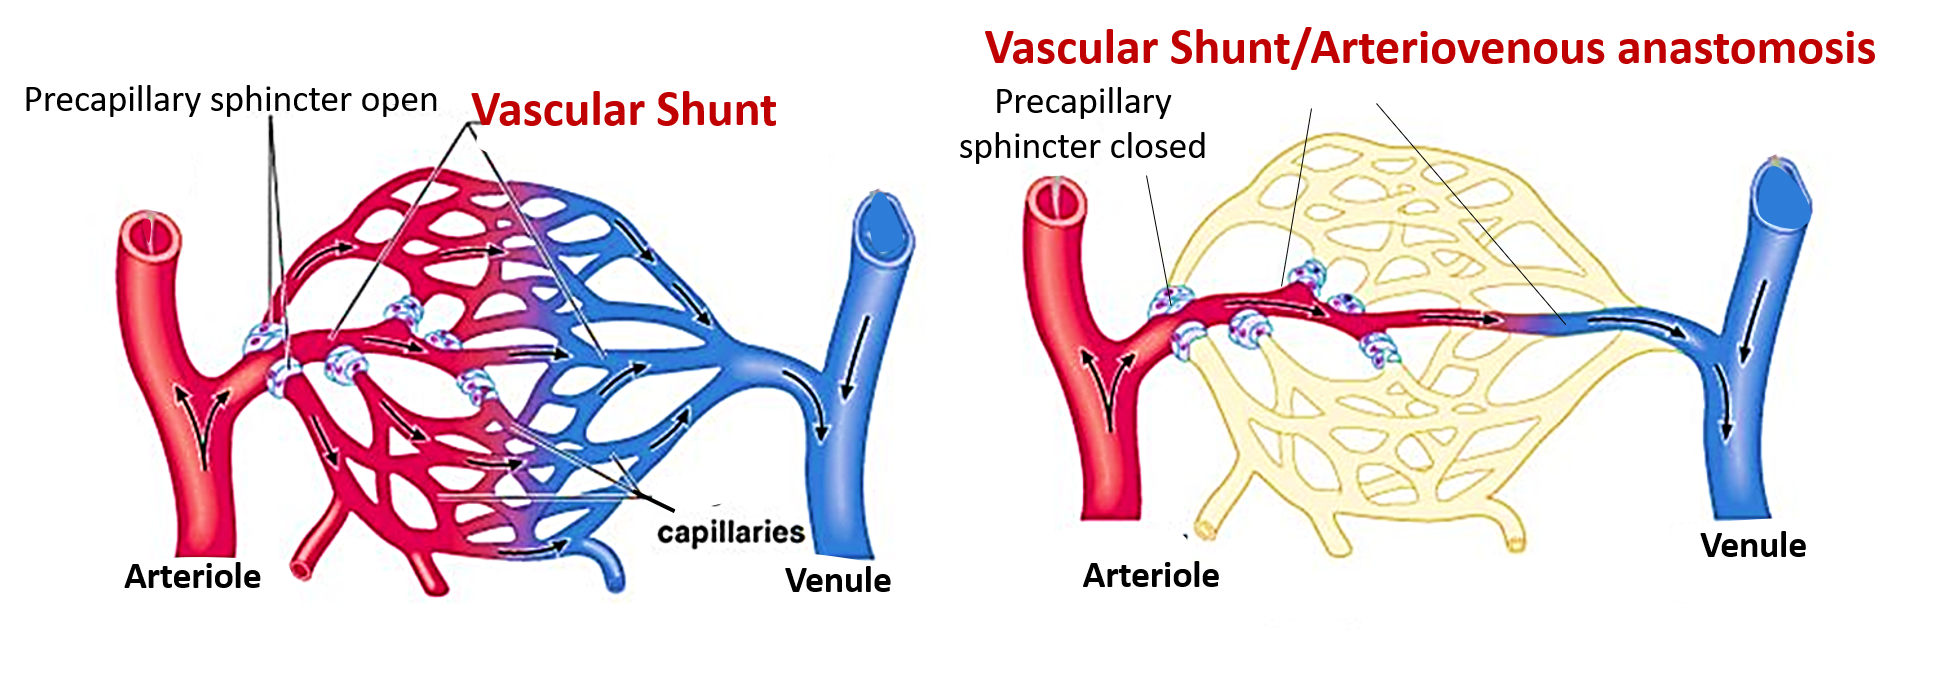 Arteriovenous anastomoses